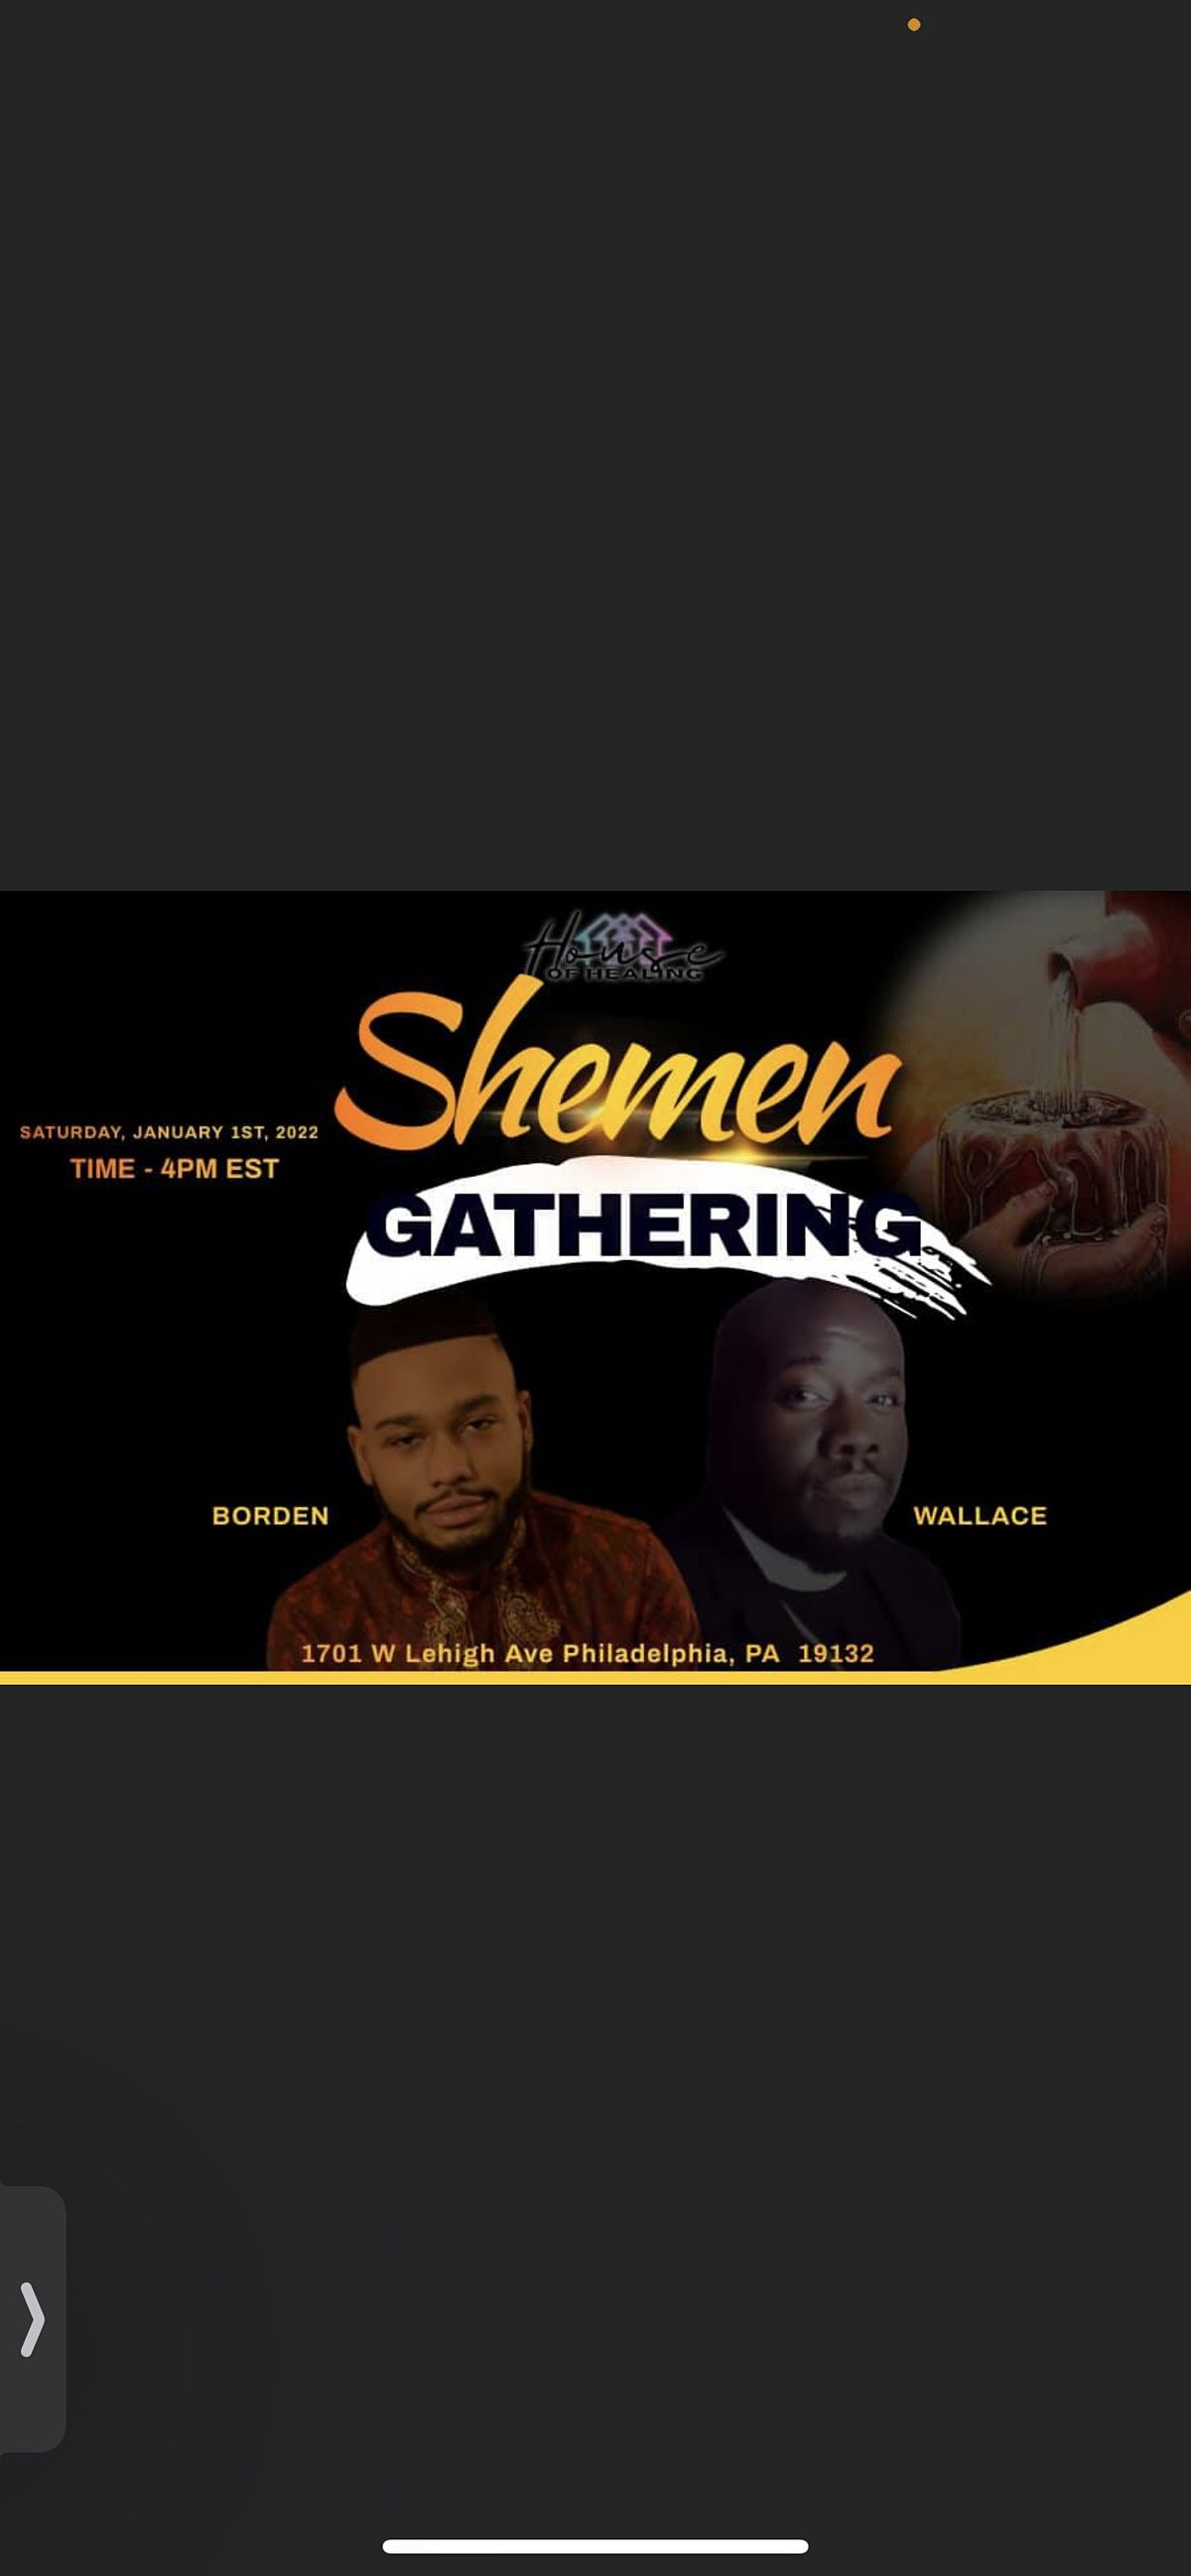 The Shemen Gathering